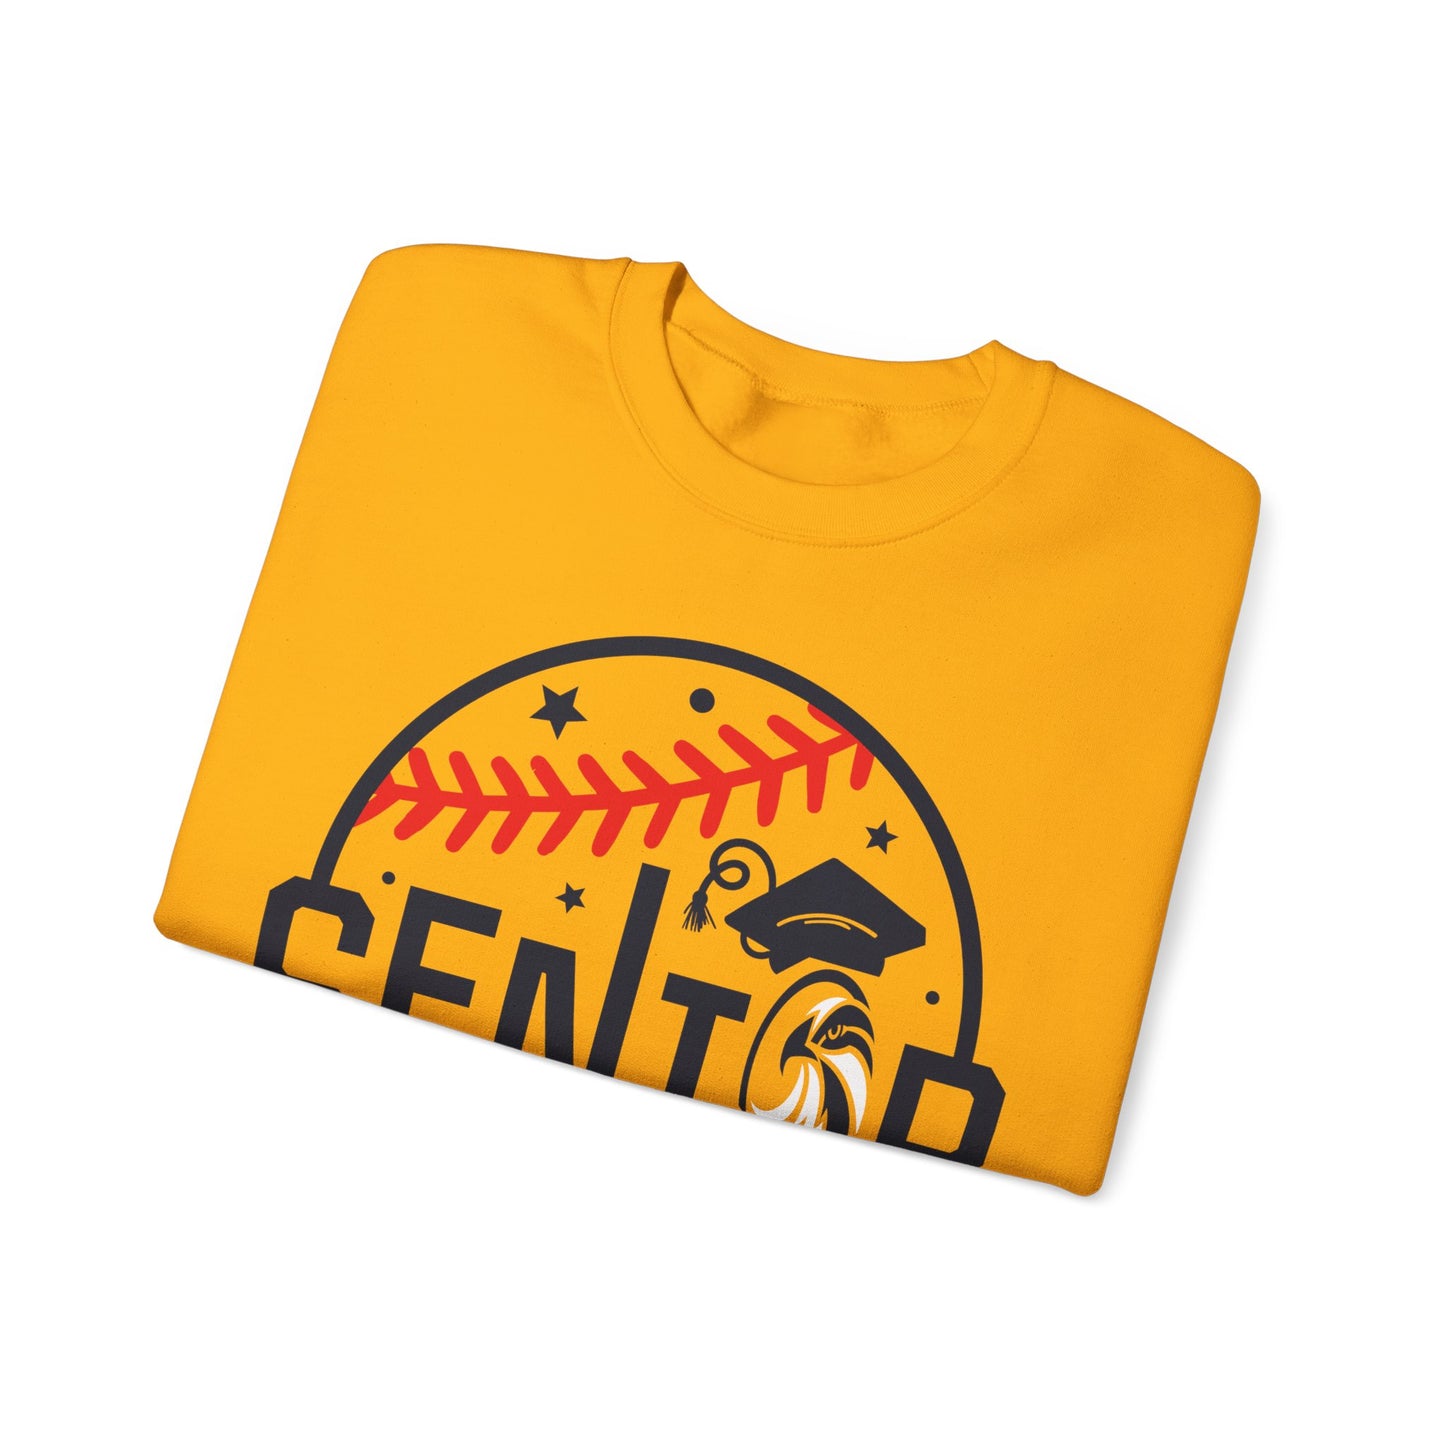 Seniors 2024 Baseball - Gildan Unisex Heavy Blend™ Crewneck Sweatshirt